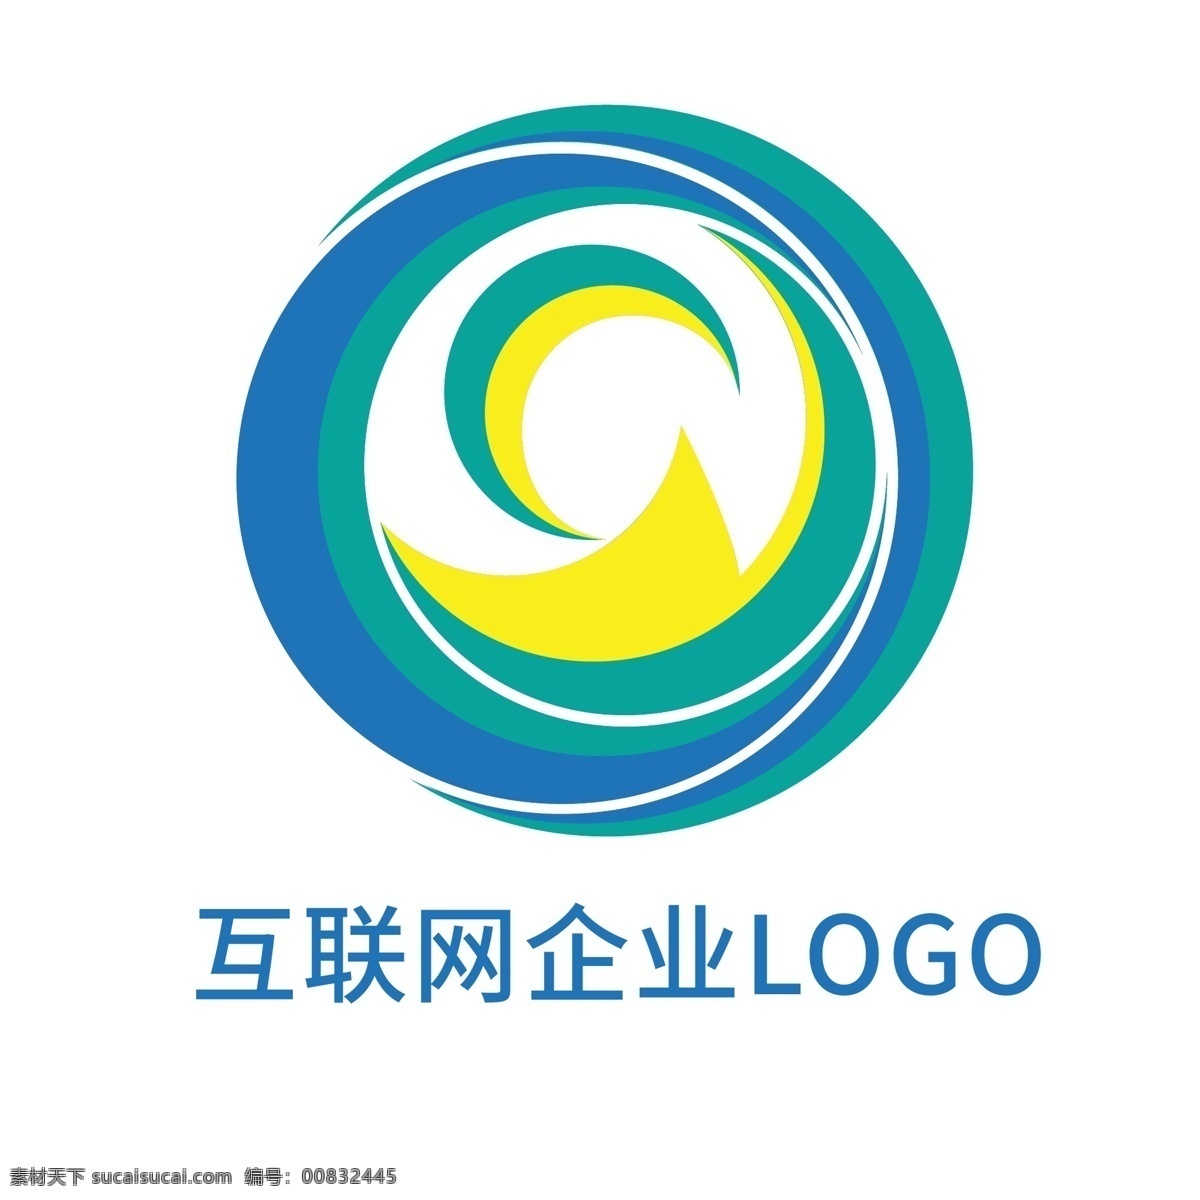 it 互联网 企业 标识 logo 设计图 logo设计 网络logo 企业logo itlogo